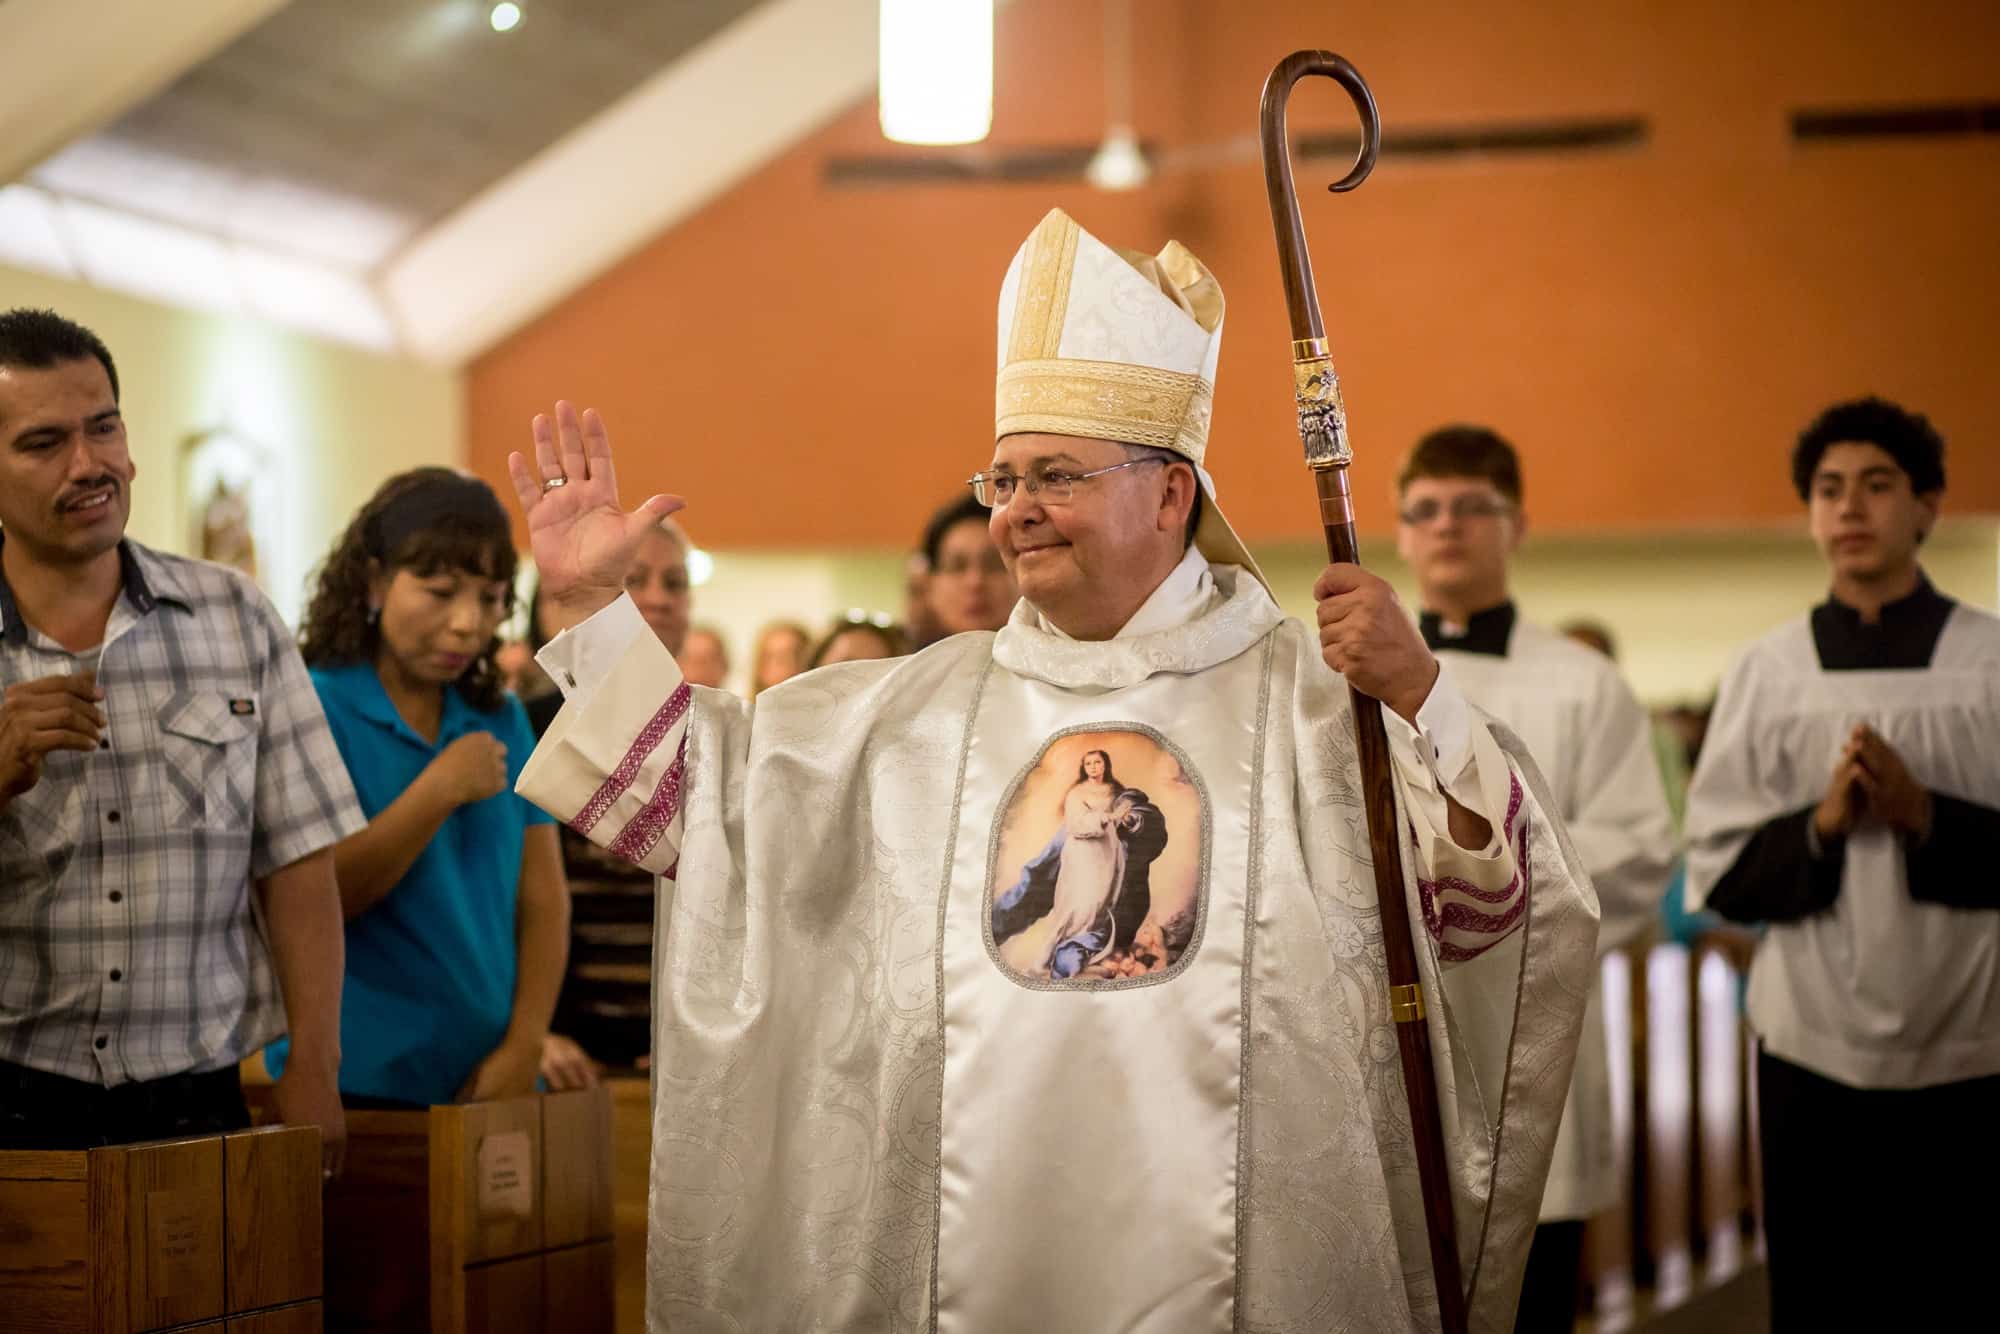 Auxiliary Bishop Eduardo A. Nevares greets parishioners during the Consecrated Life Celebration on Sunday, November 1, 2015 at St. Vincent De Paul Parish.